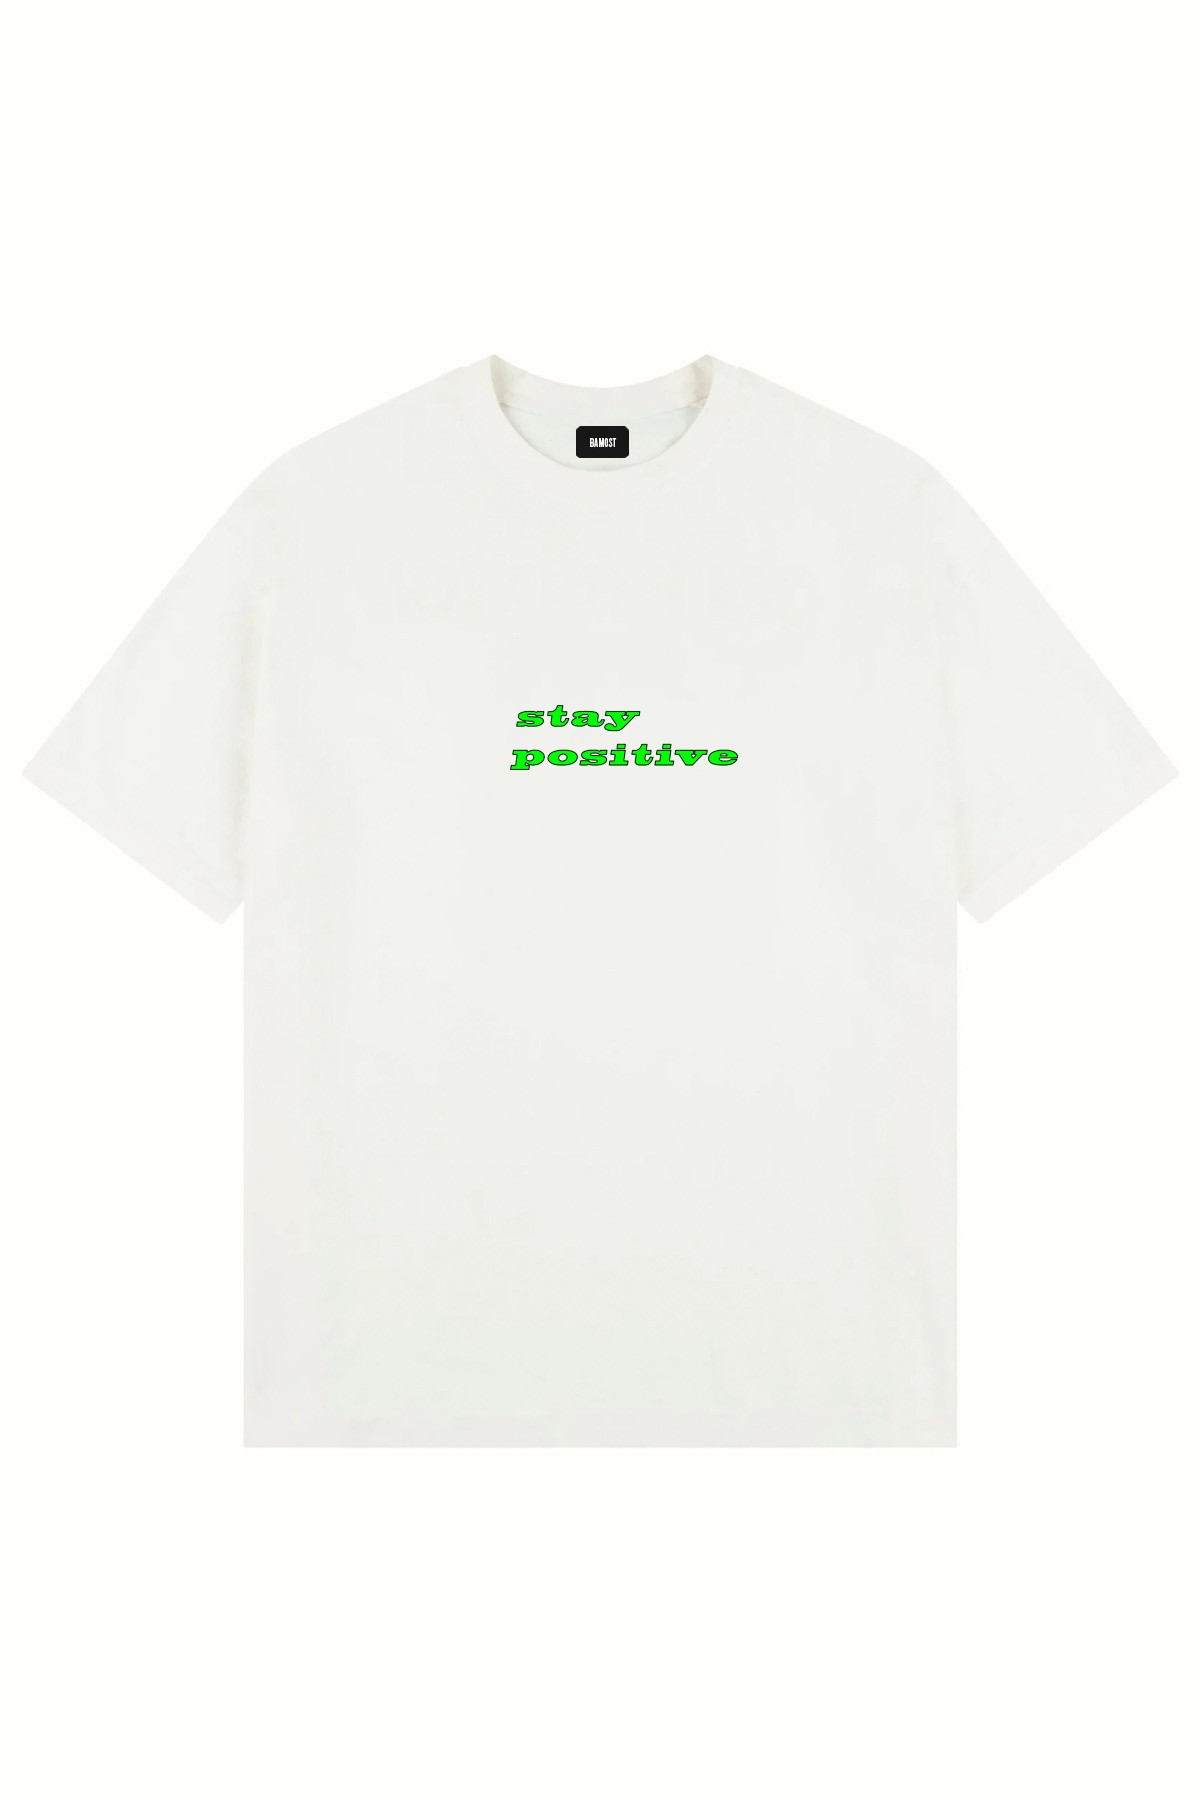 2025 - Oversize Printed T-Shirt